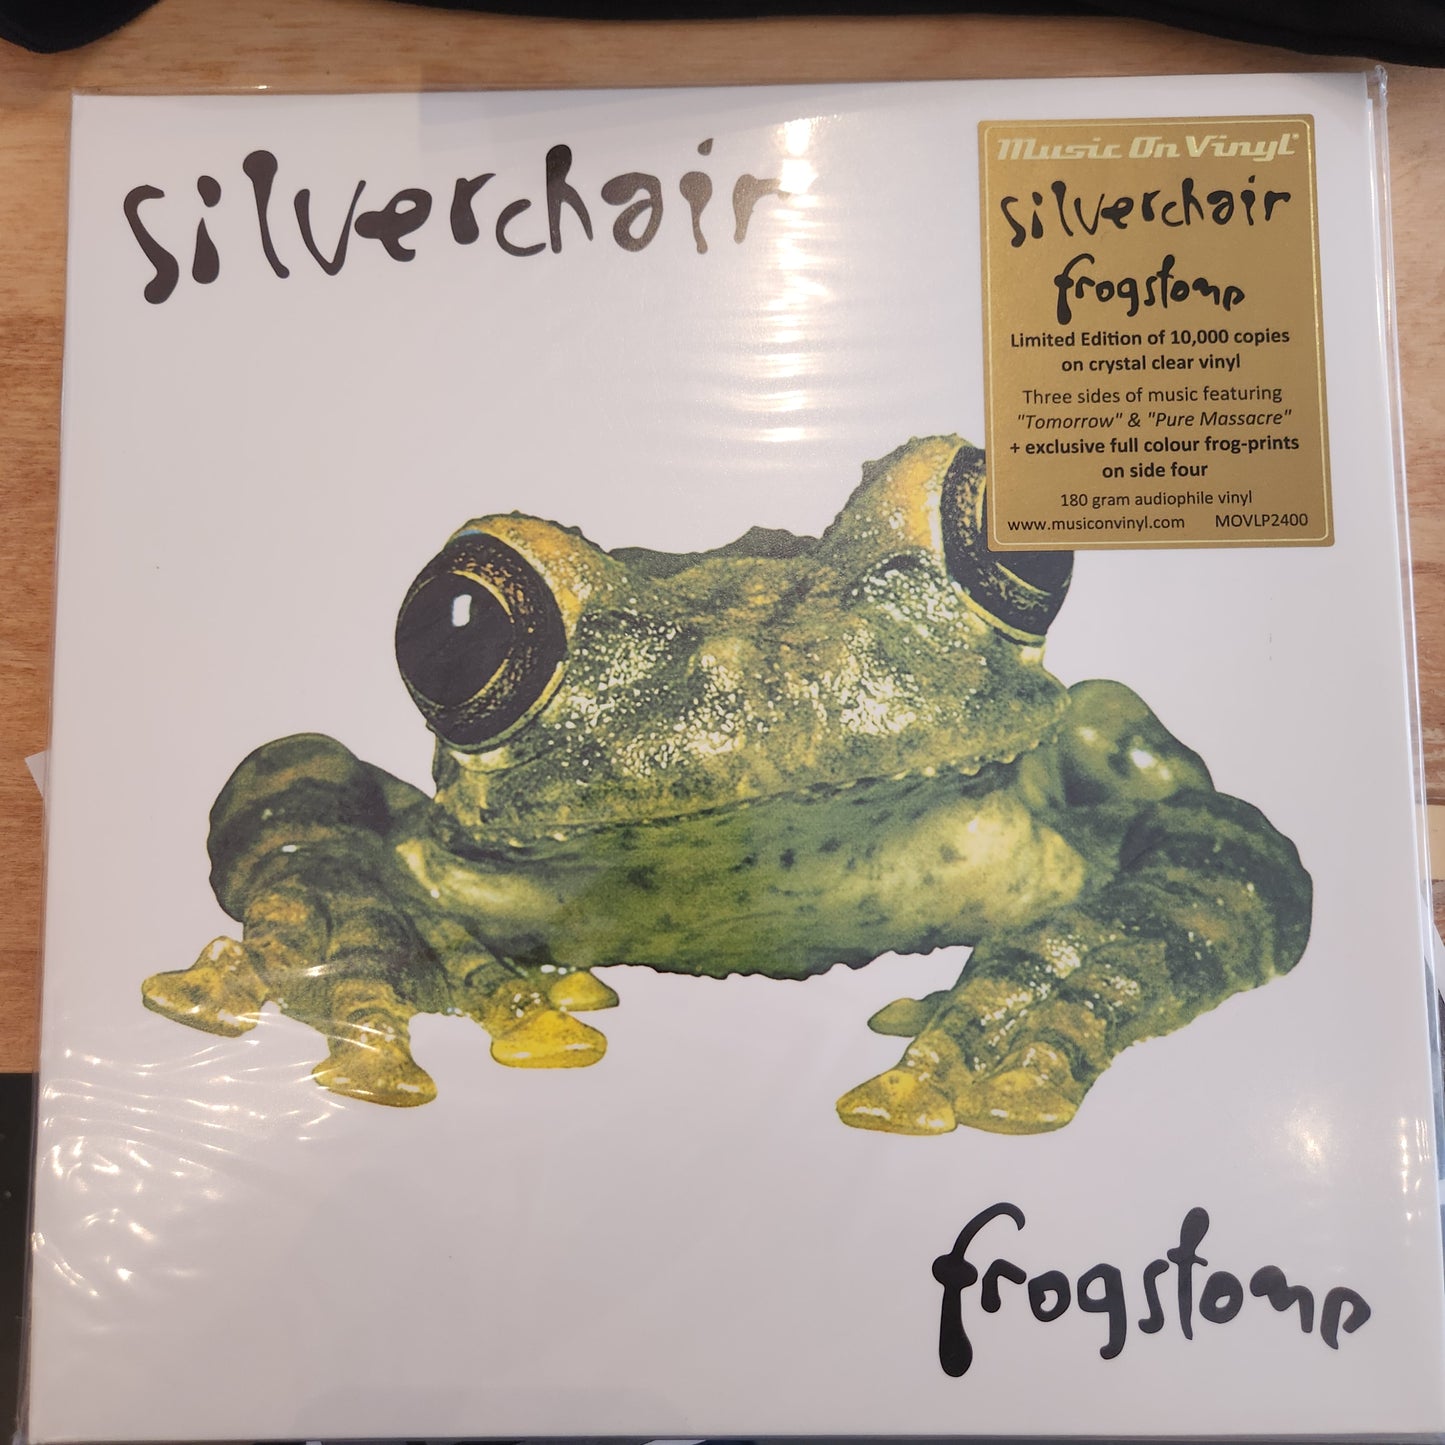 Silverchair - Frogstomp - 180 Gram Vinyl LP